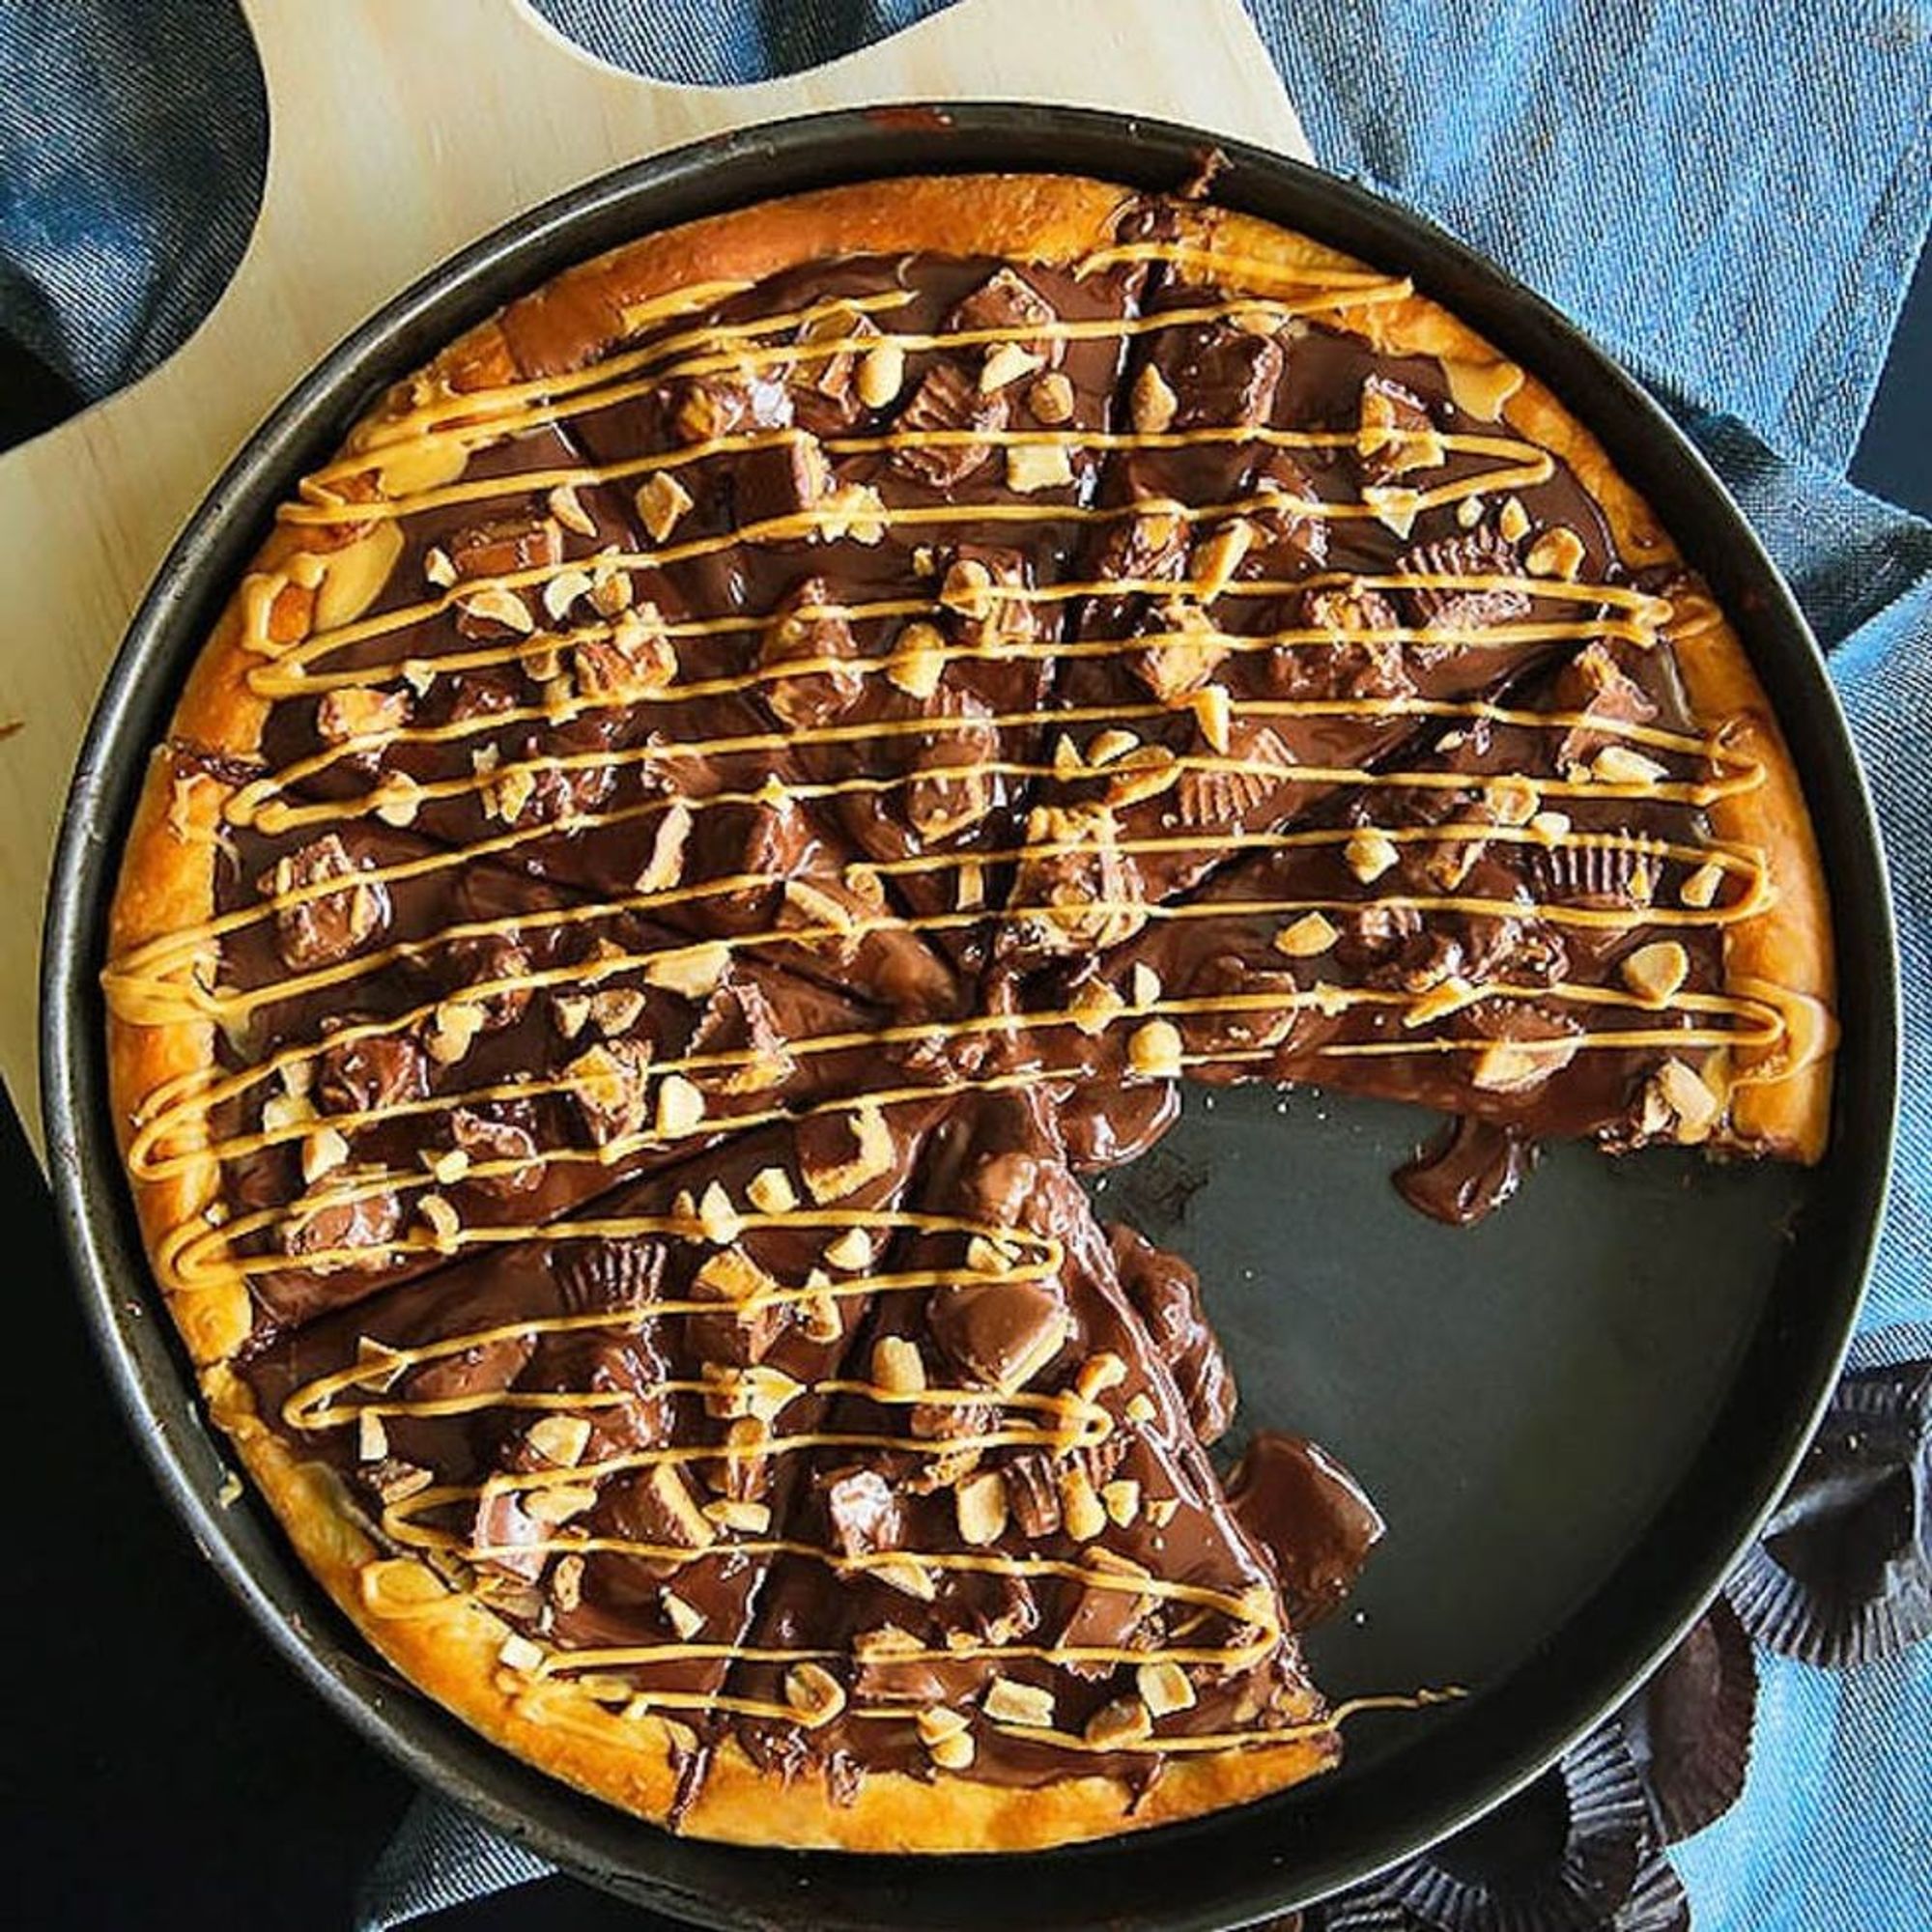 шоколадная пицца начинки фото 87